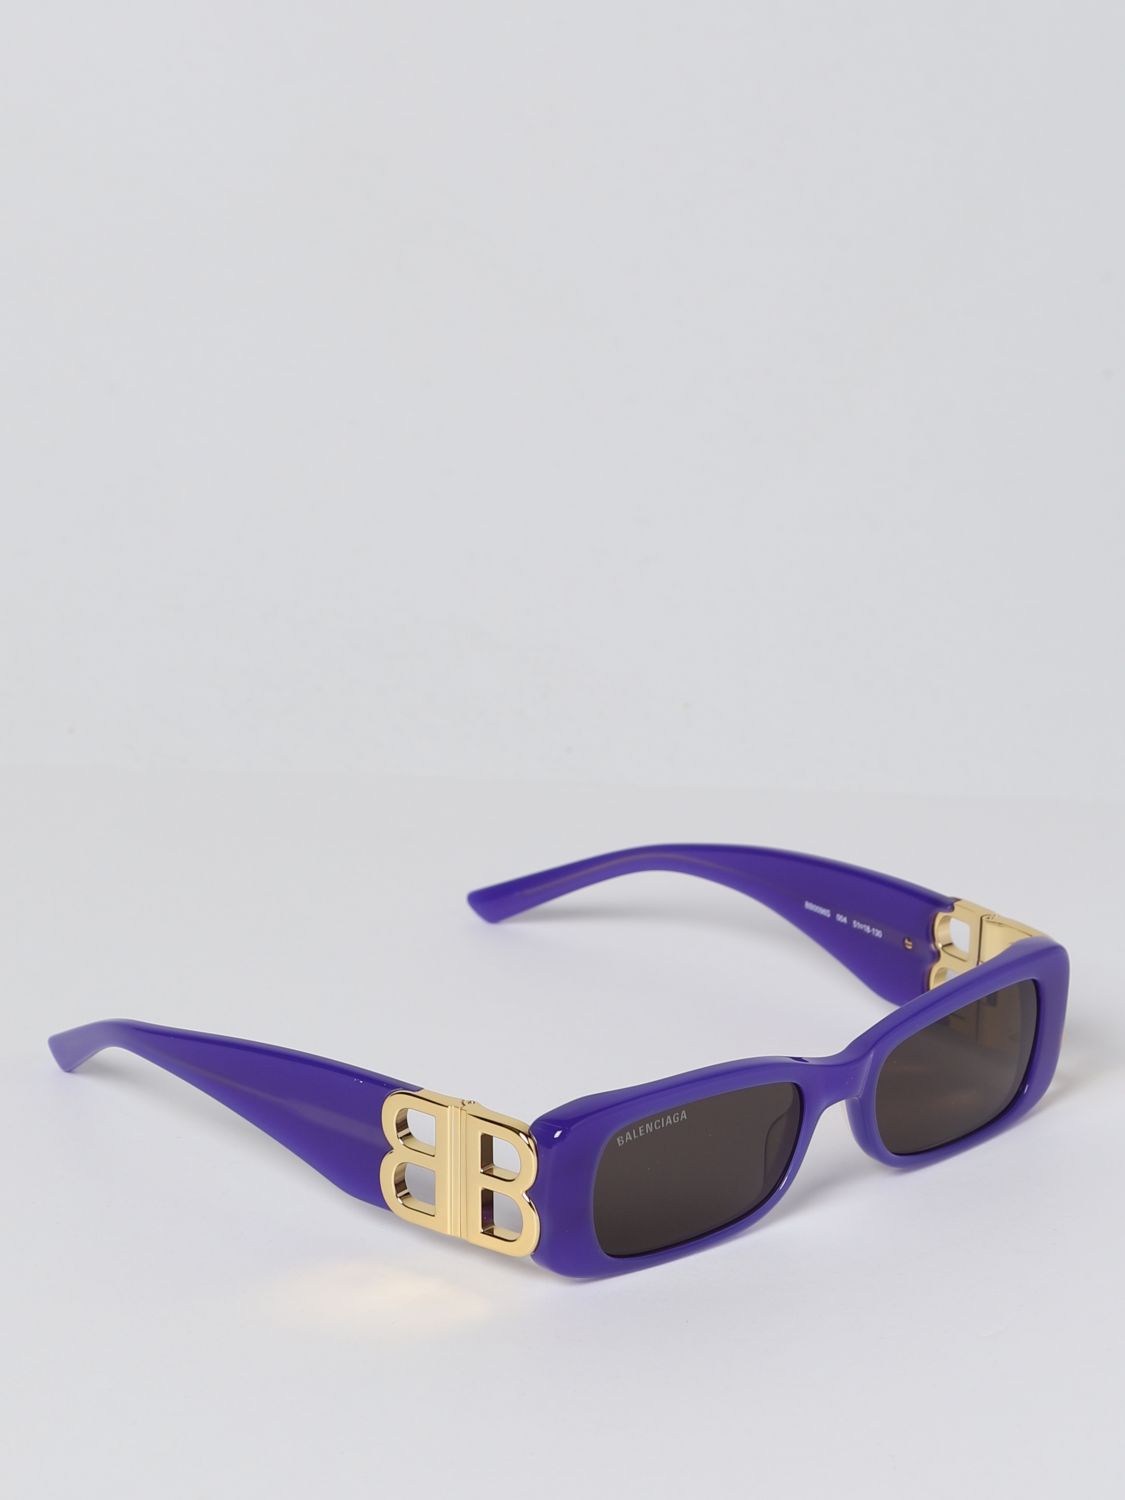 Balenciaga BB sunglasses